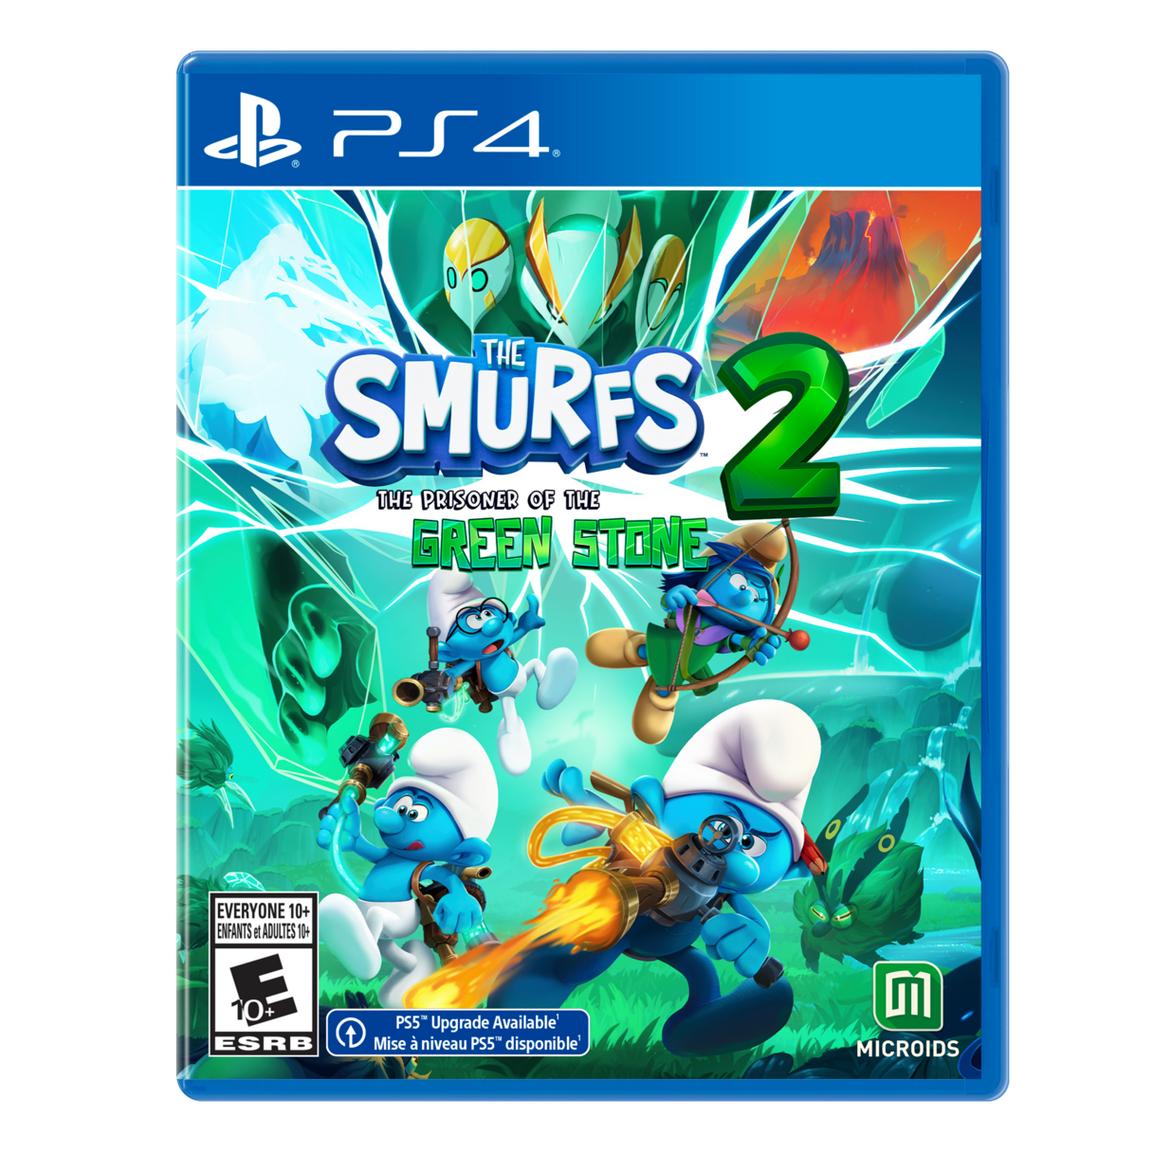 Видеоигра The Smurfs 2: Prisoner of the Green Stone - PlayStation 4 xbox игра microids asterix